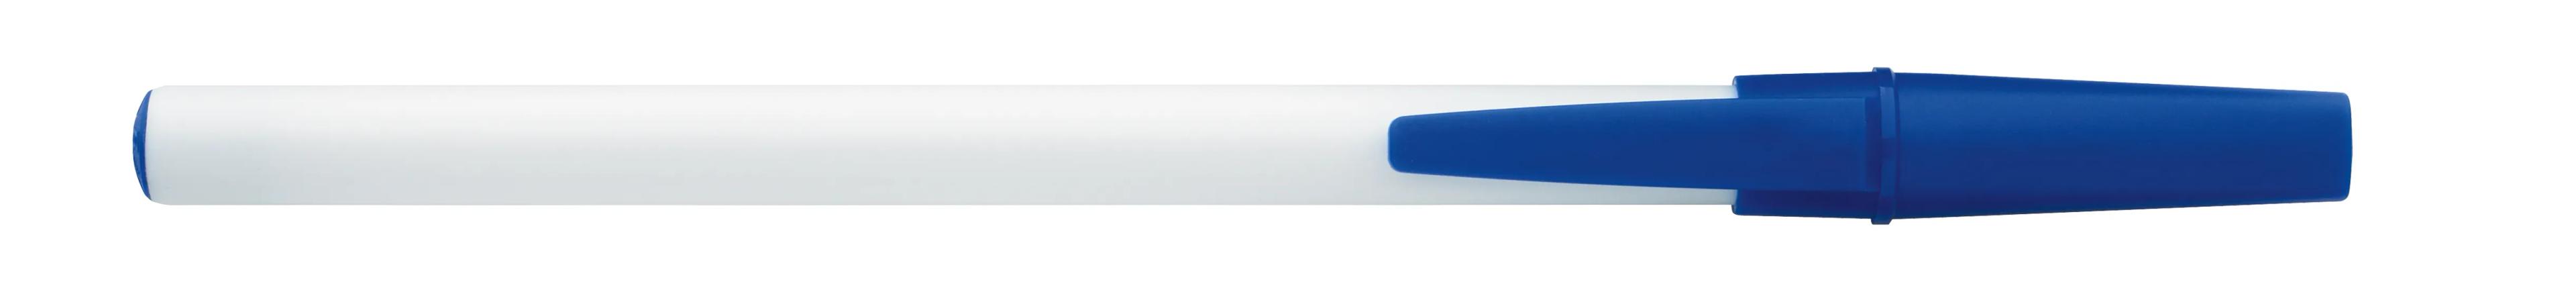 Promo Stick Pen 5 of 33